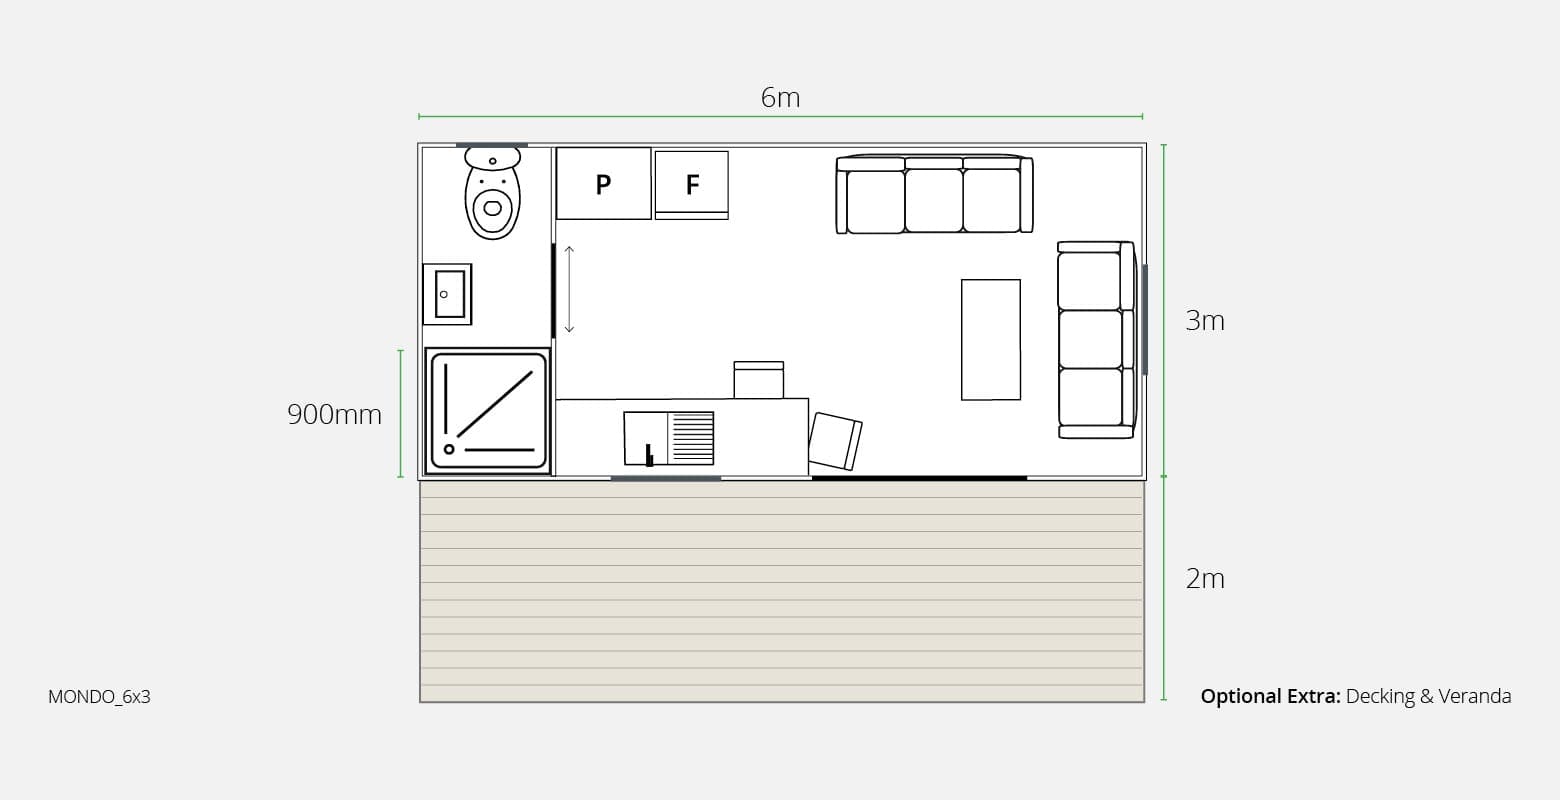 cool-cabins-floor-plan-6mx3m